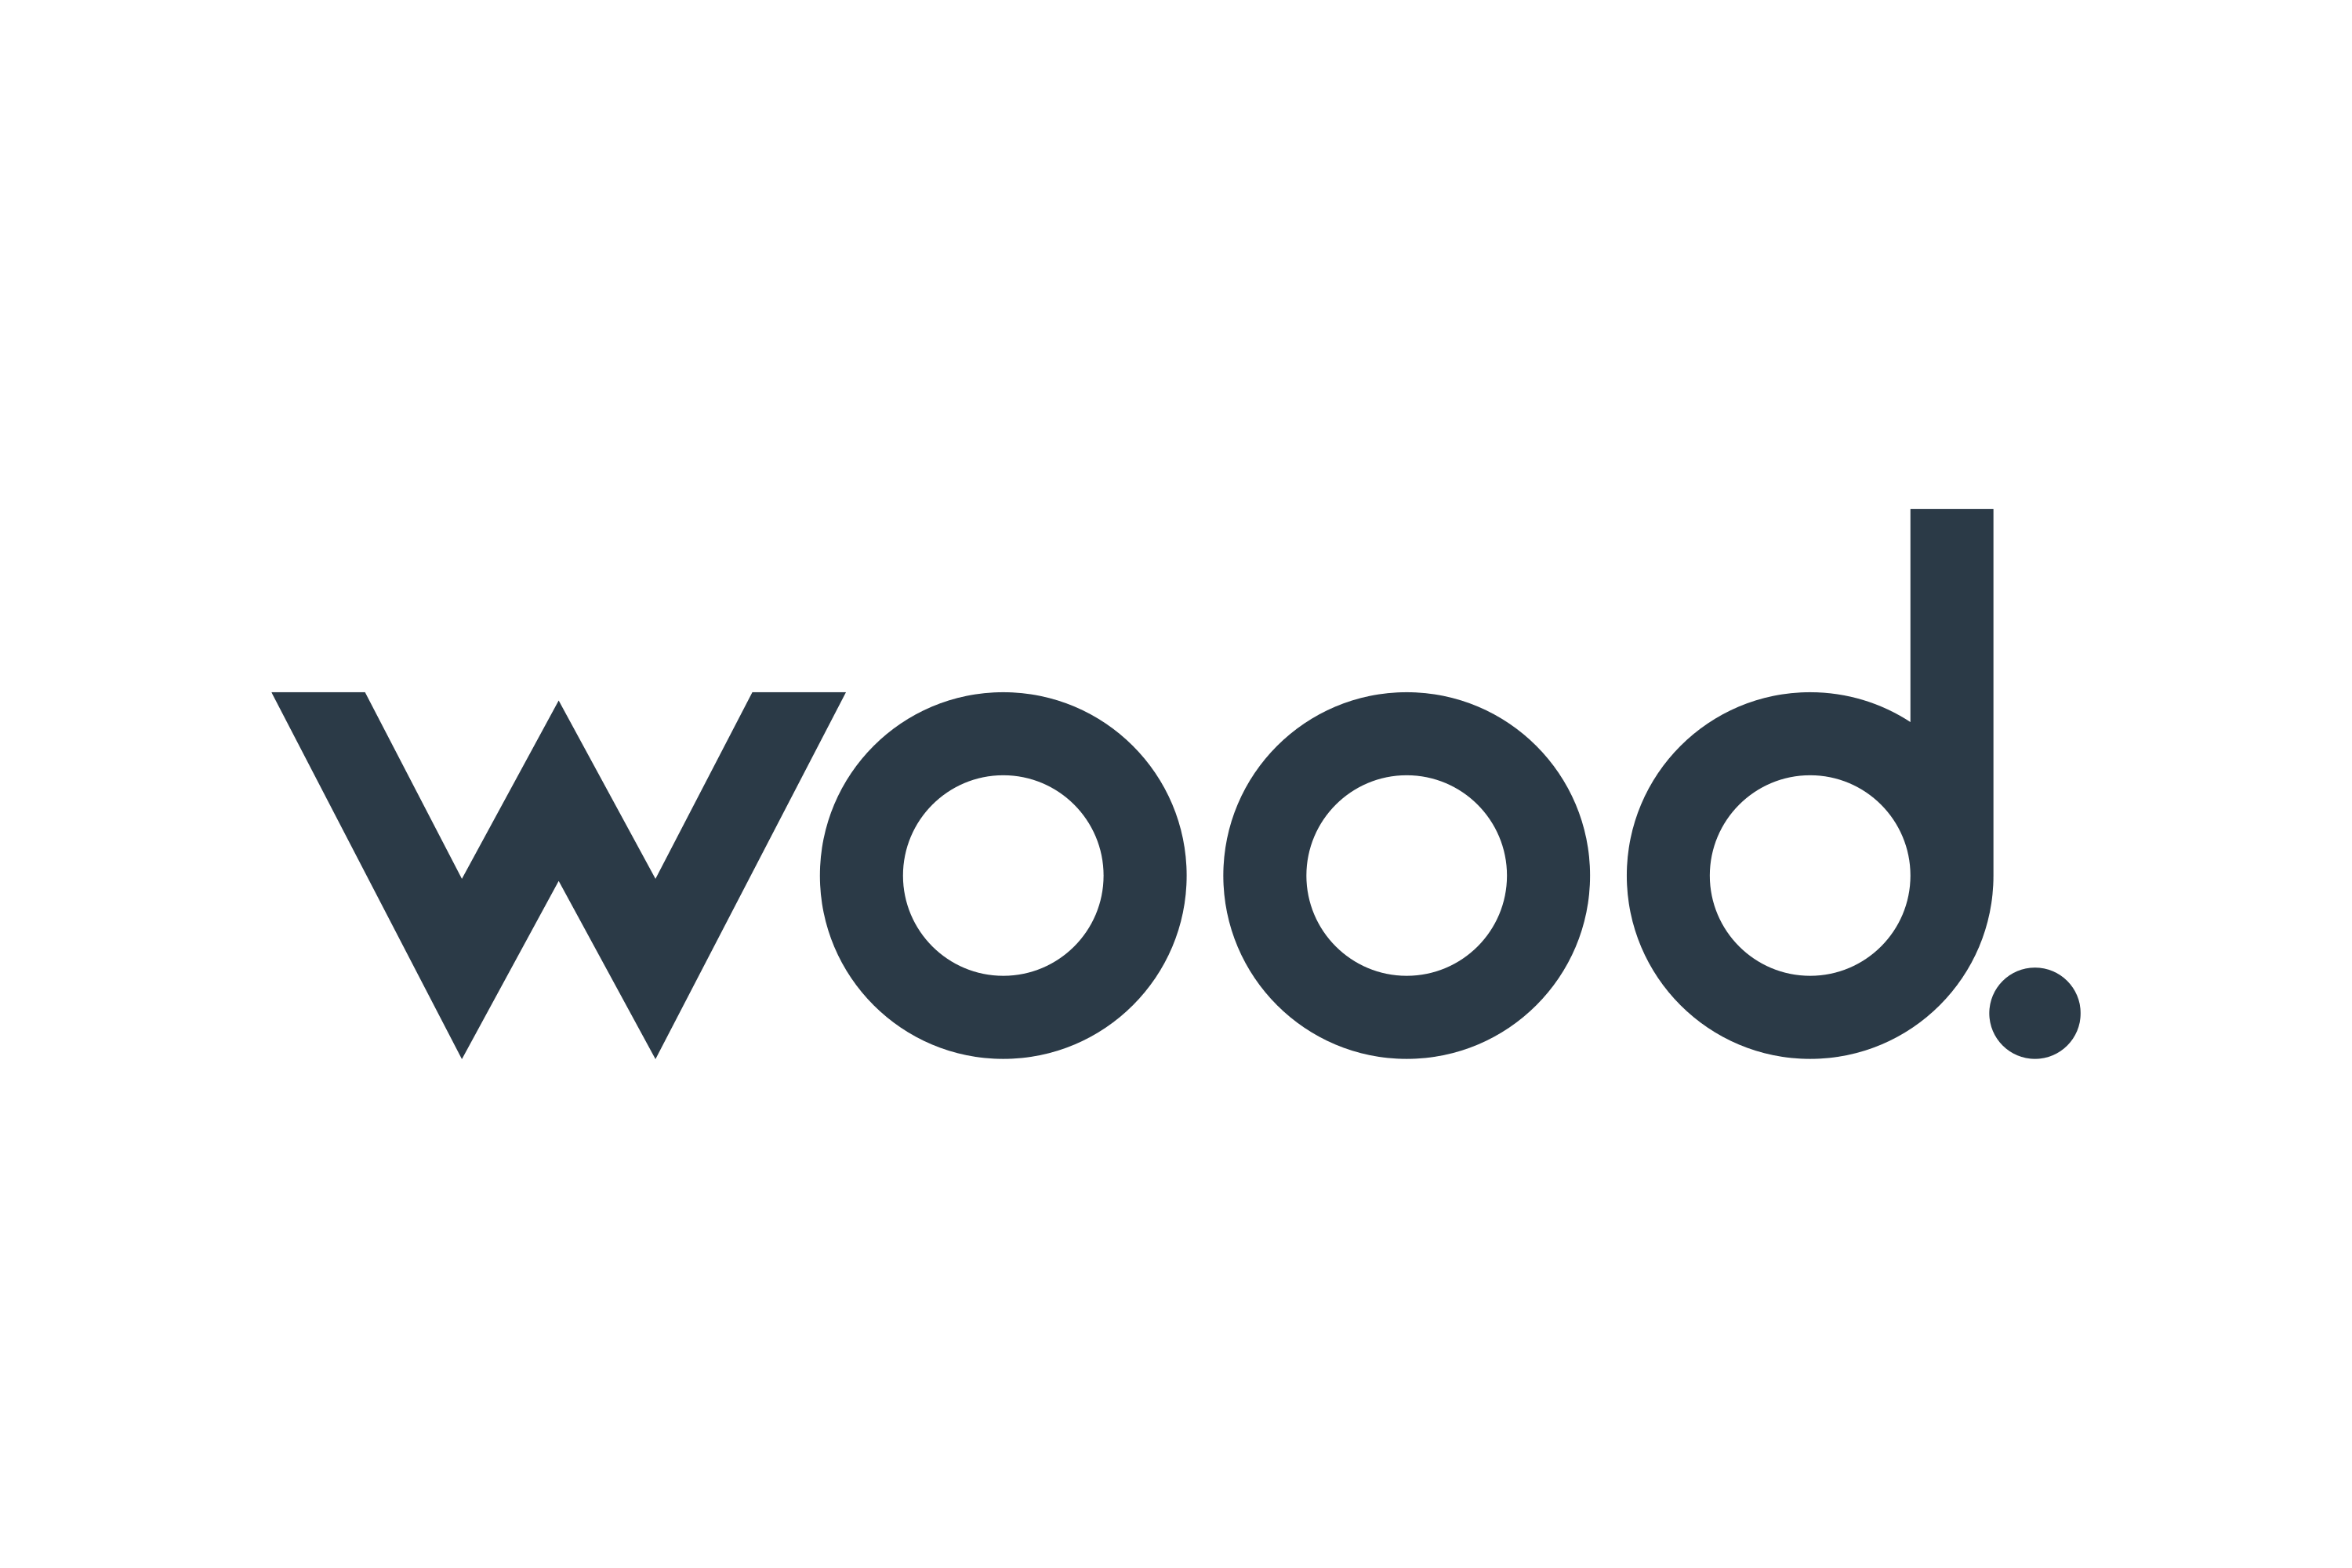 John_Wood_Group-Logo.wine